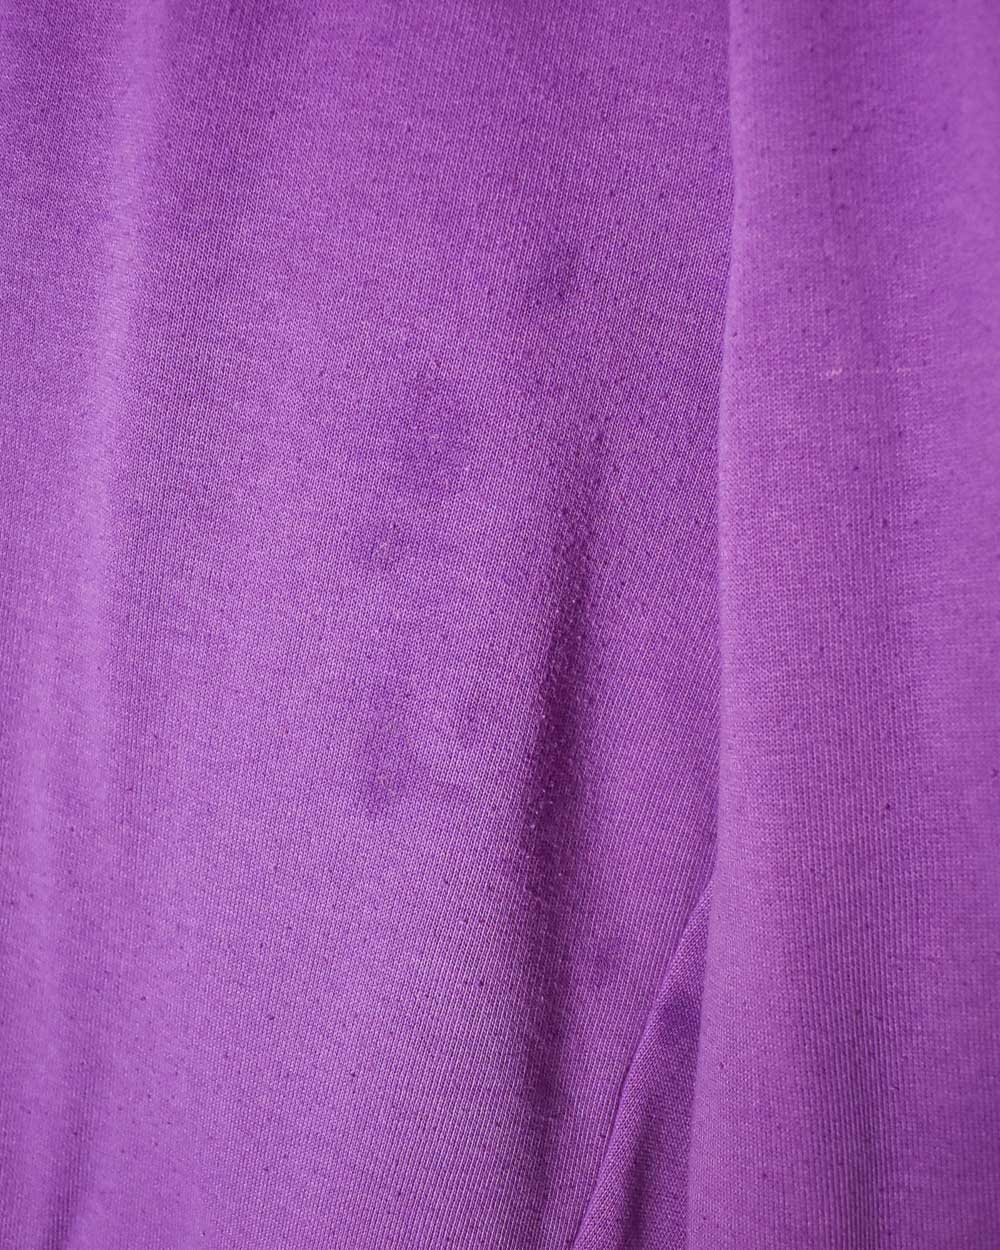 Purple Adidas Tracksuit Bottoms - Medium